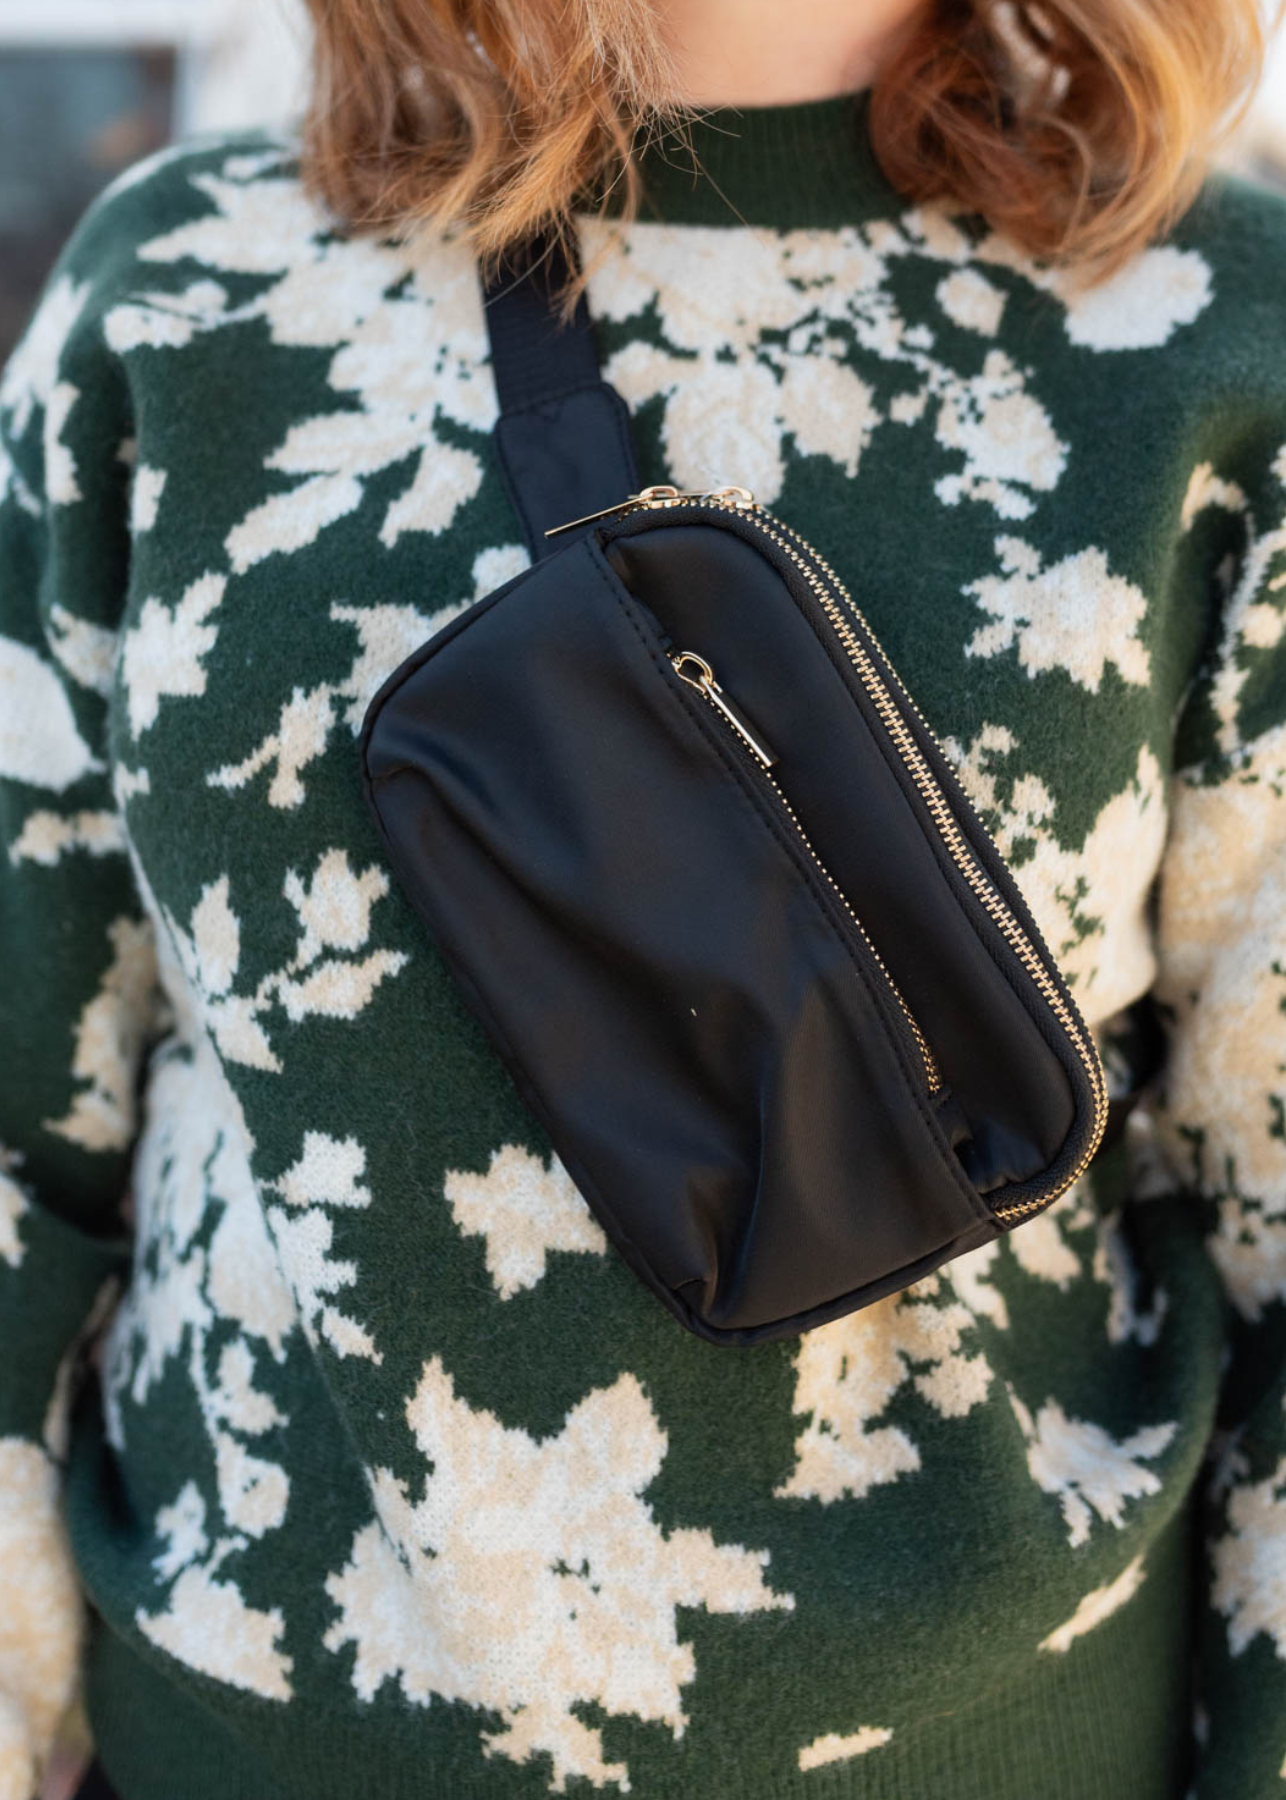 Black crossbody fanny pack with zipper pocket